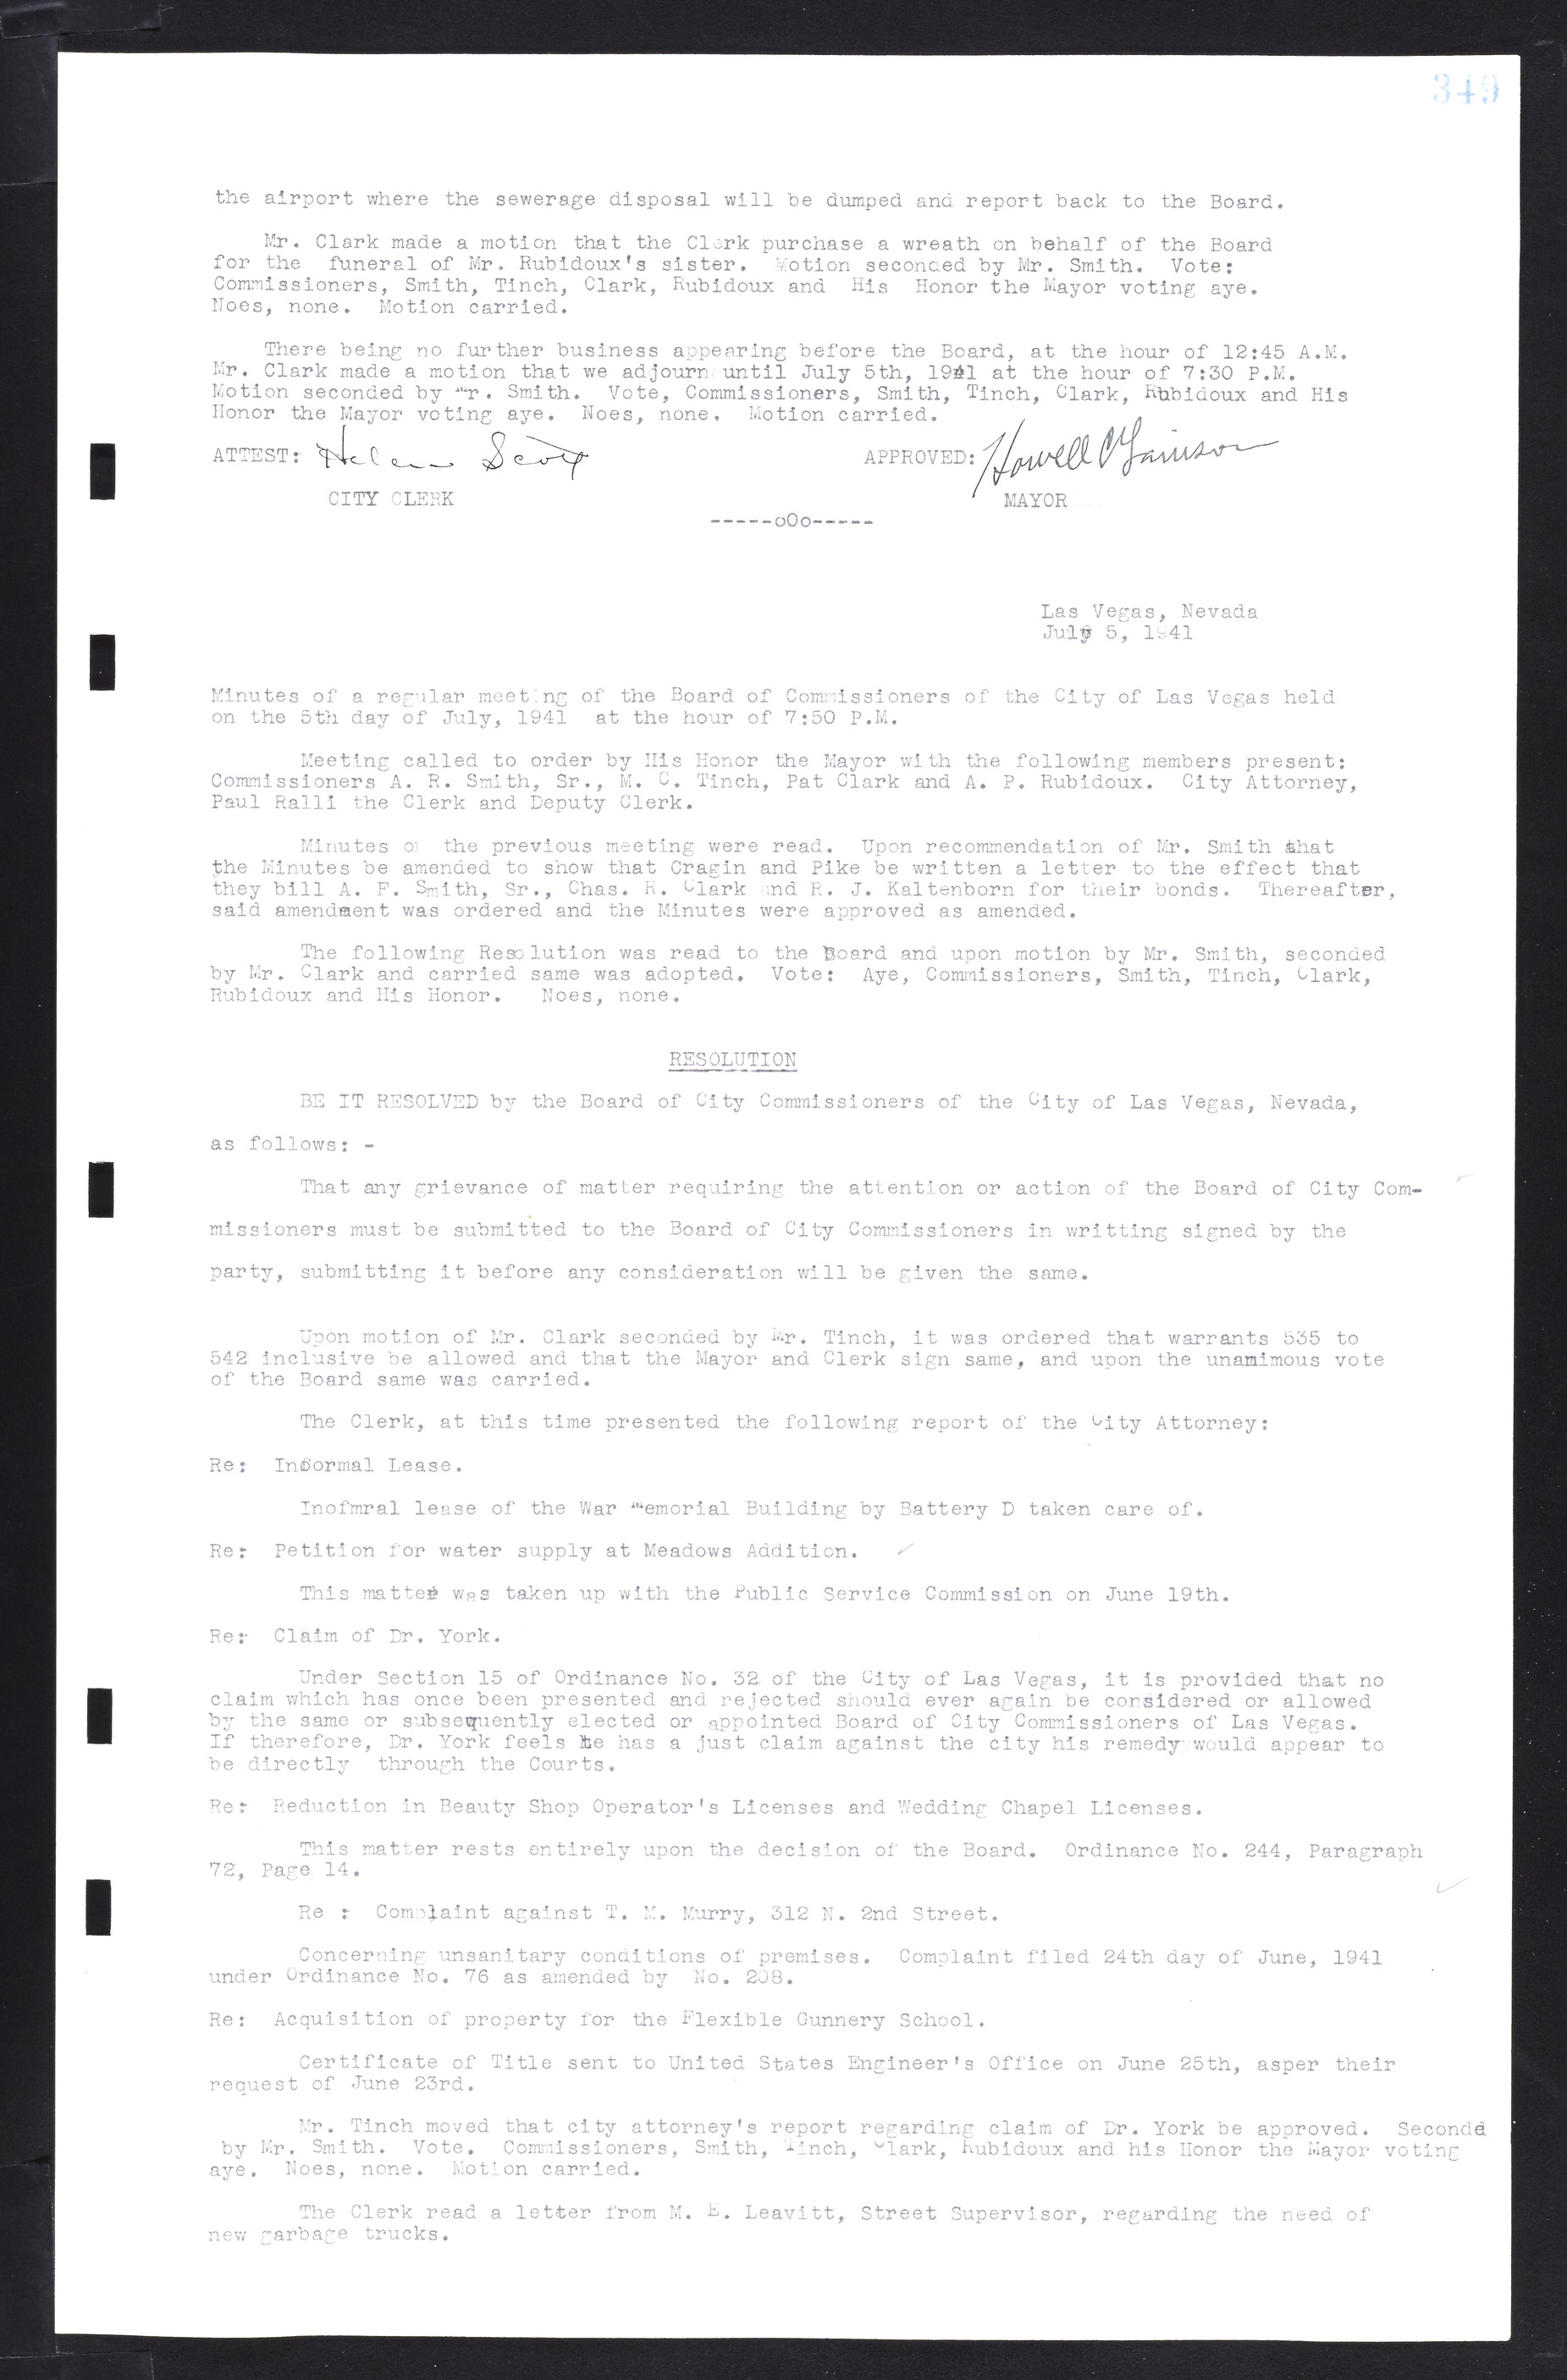 Las Vegas City Commission Minutes, February 17, 1937 to August 4, 1942, lvc000004-375